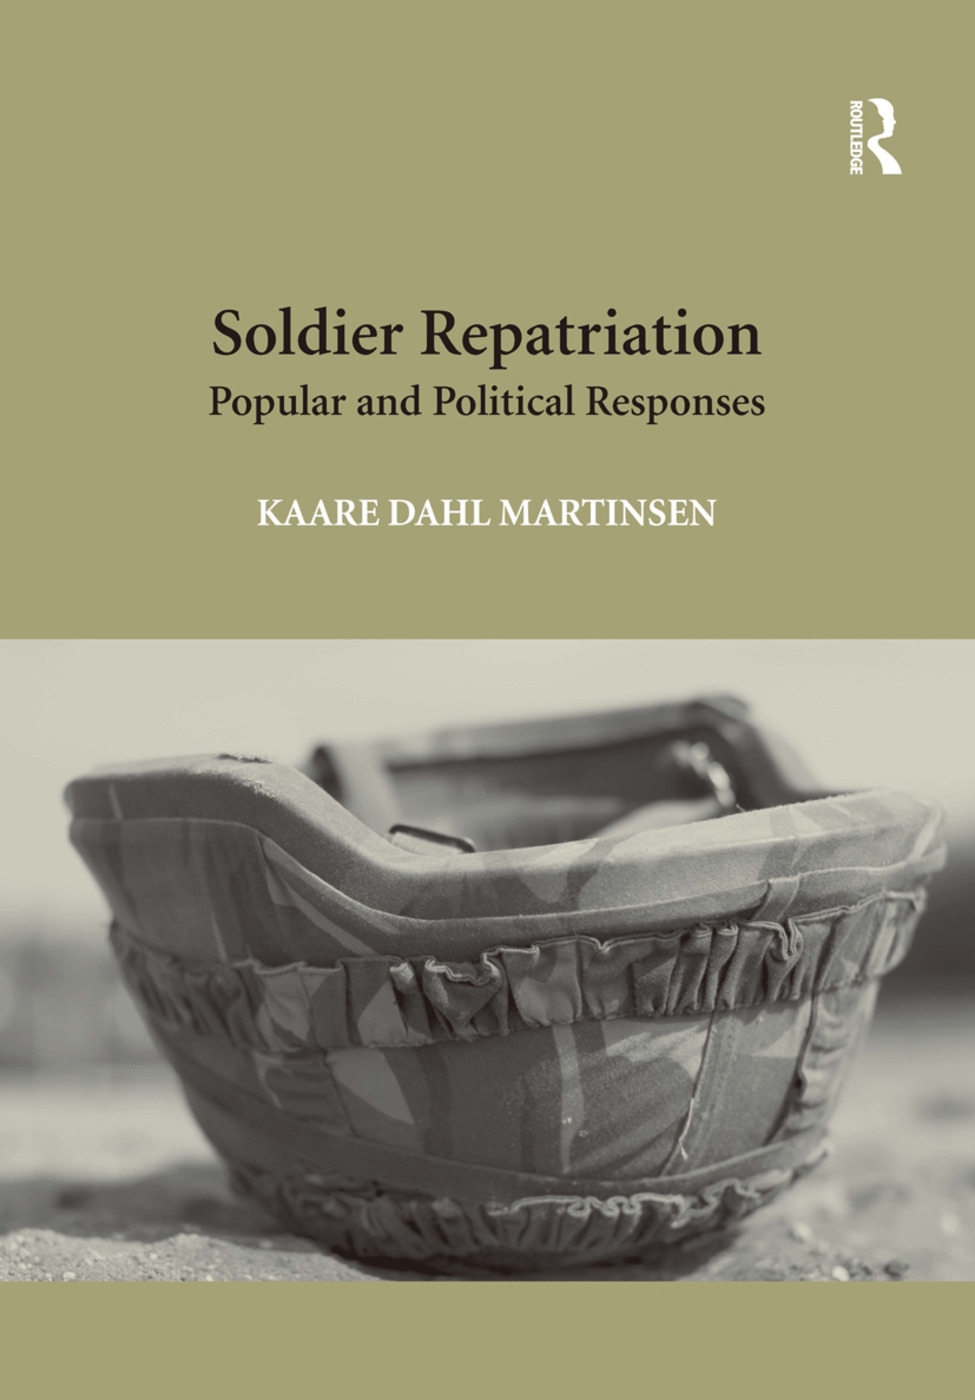 Soldier Repatriation: Popular and Political Responses. Kaare Dahl Martinsen